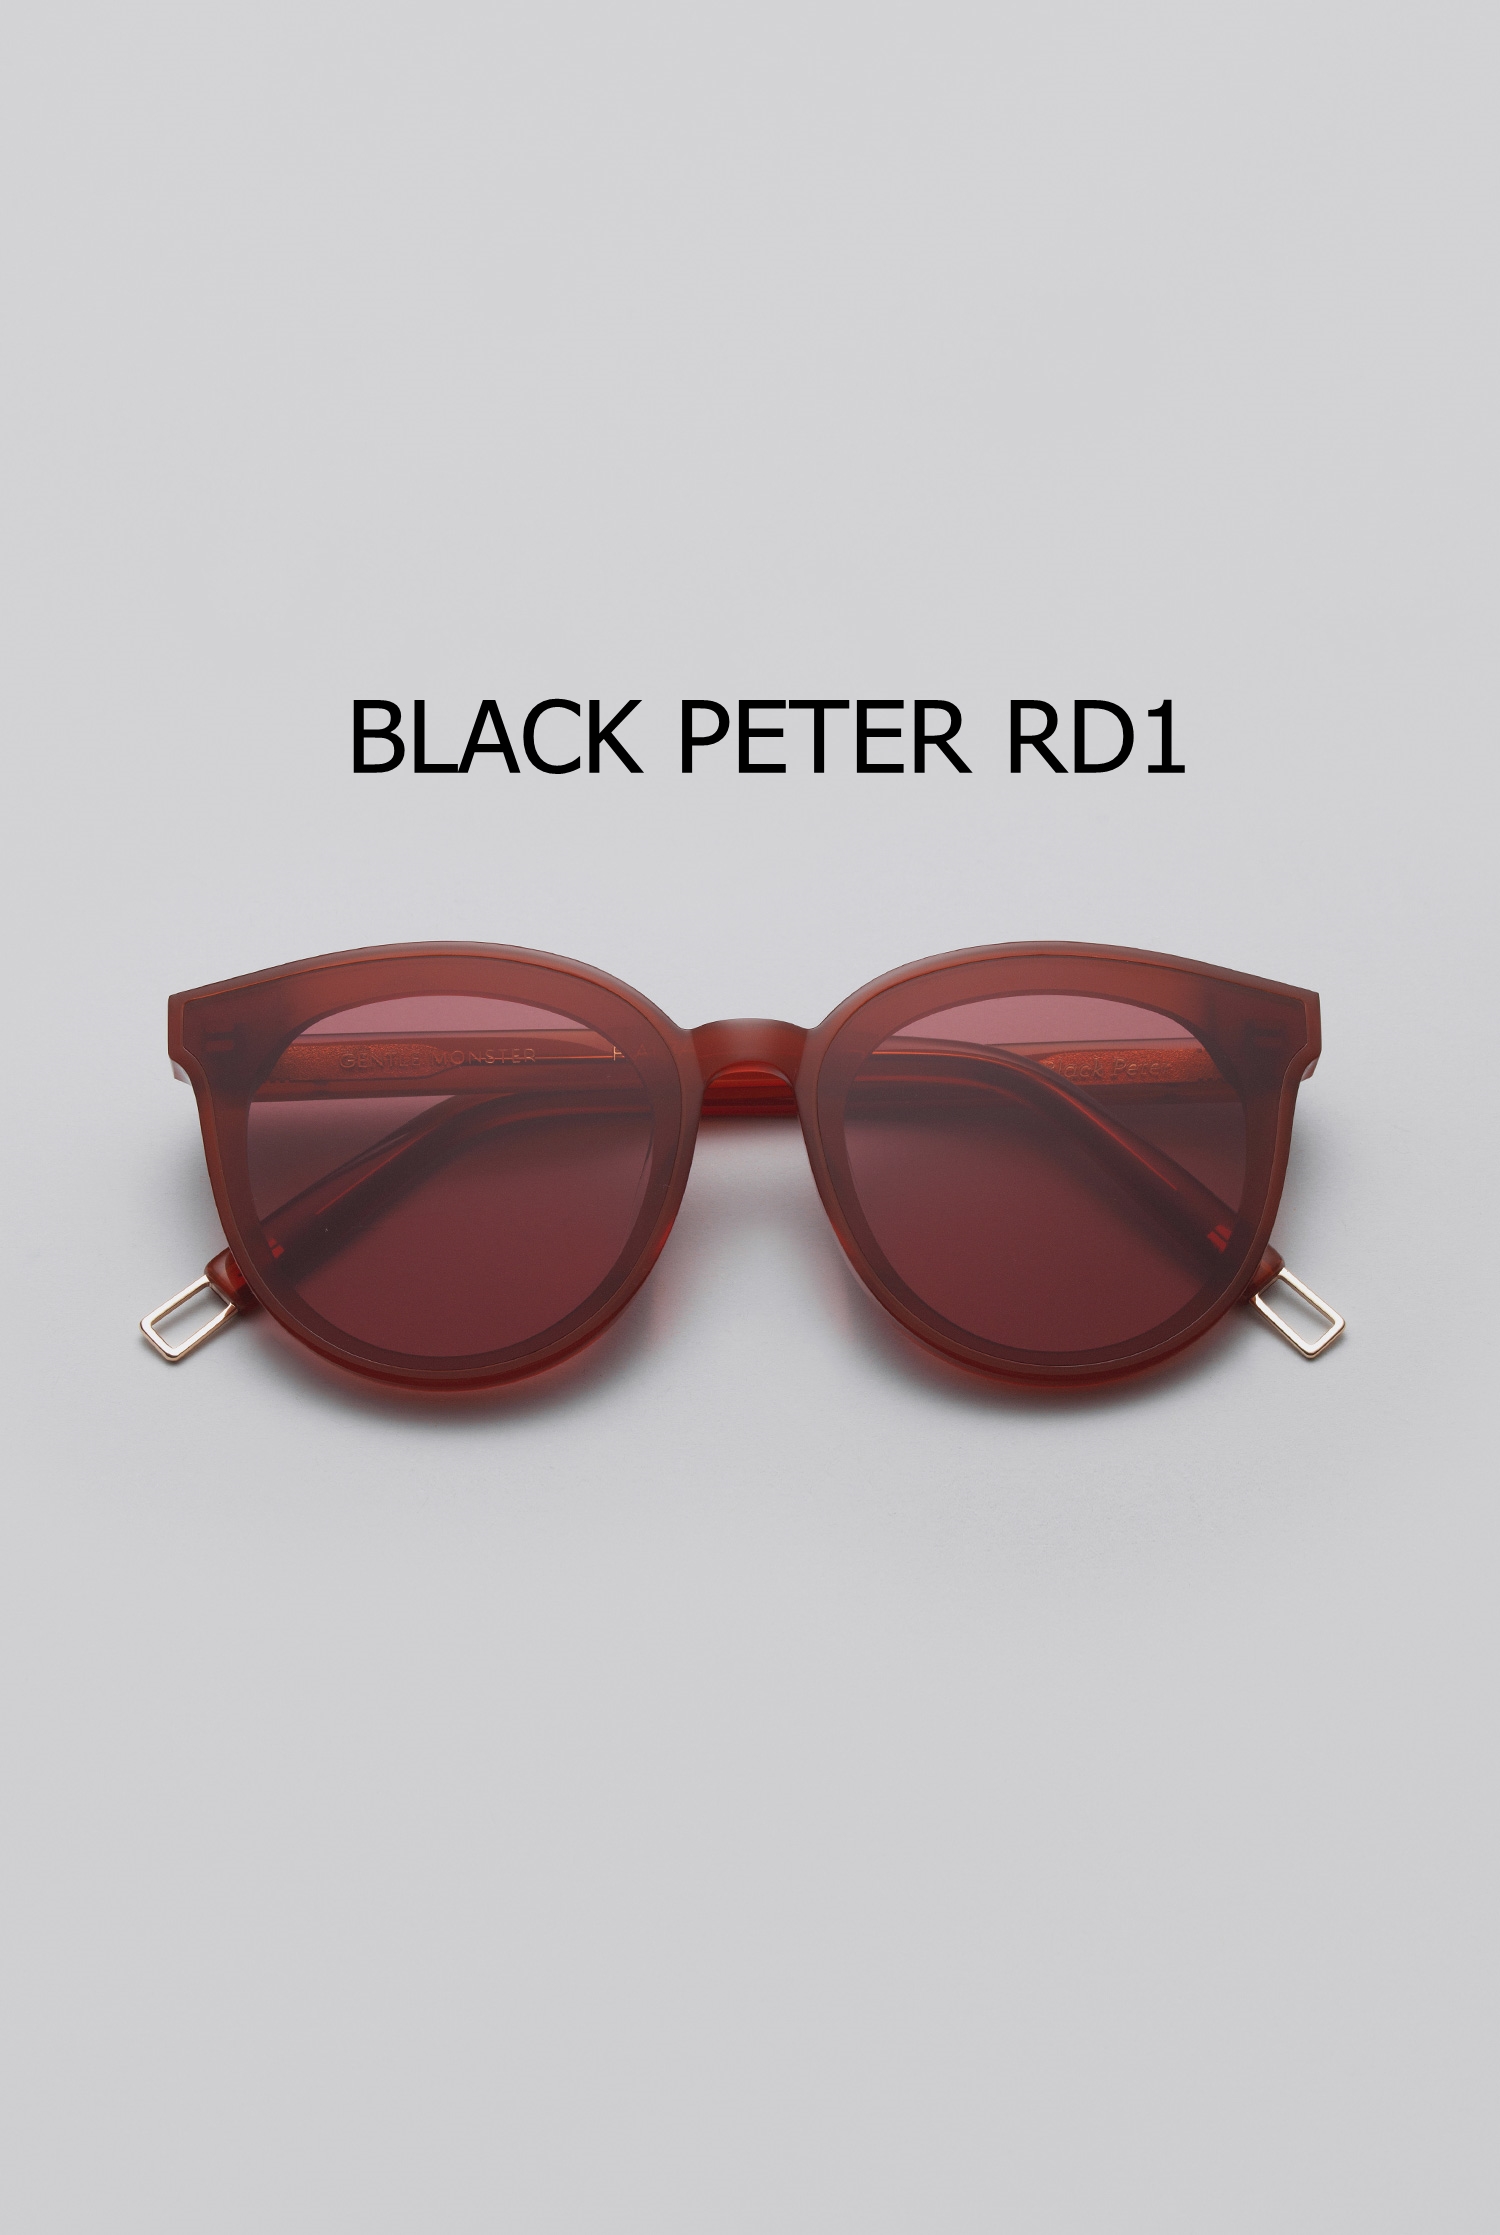 BLACK PETER RD1